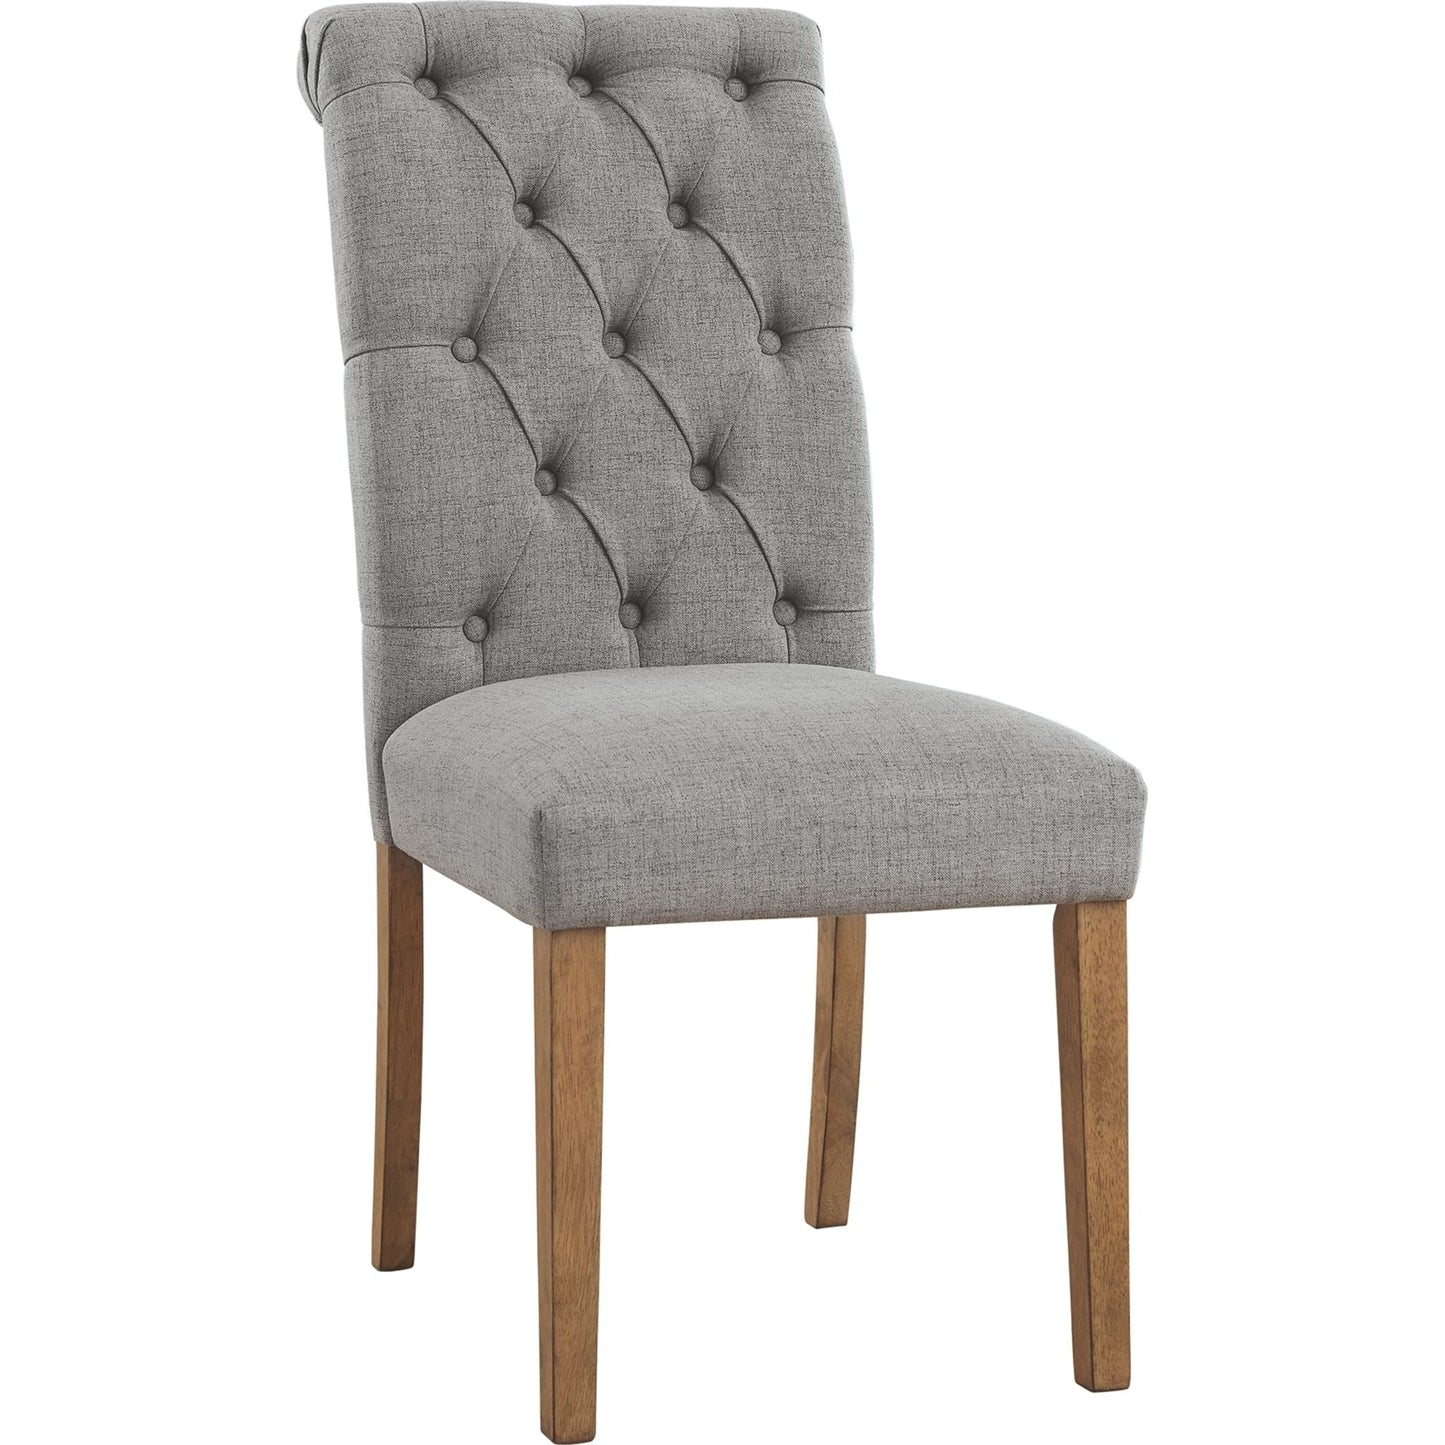 Harvina Upholstered Side Chair - Gray - (D324-01)